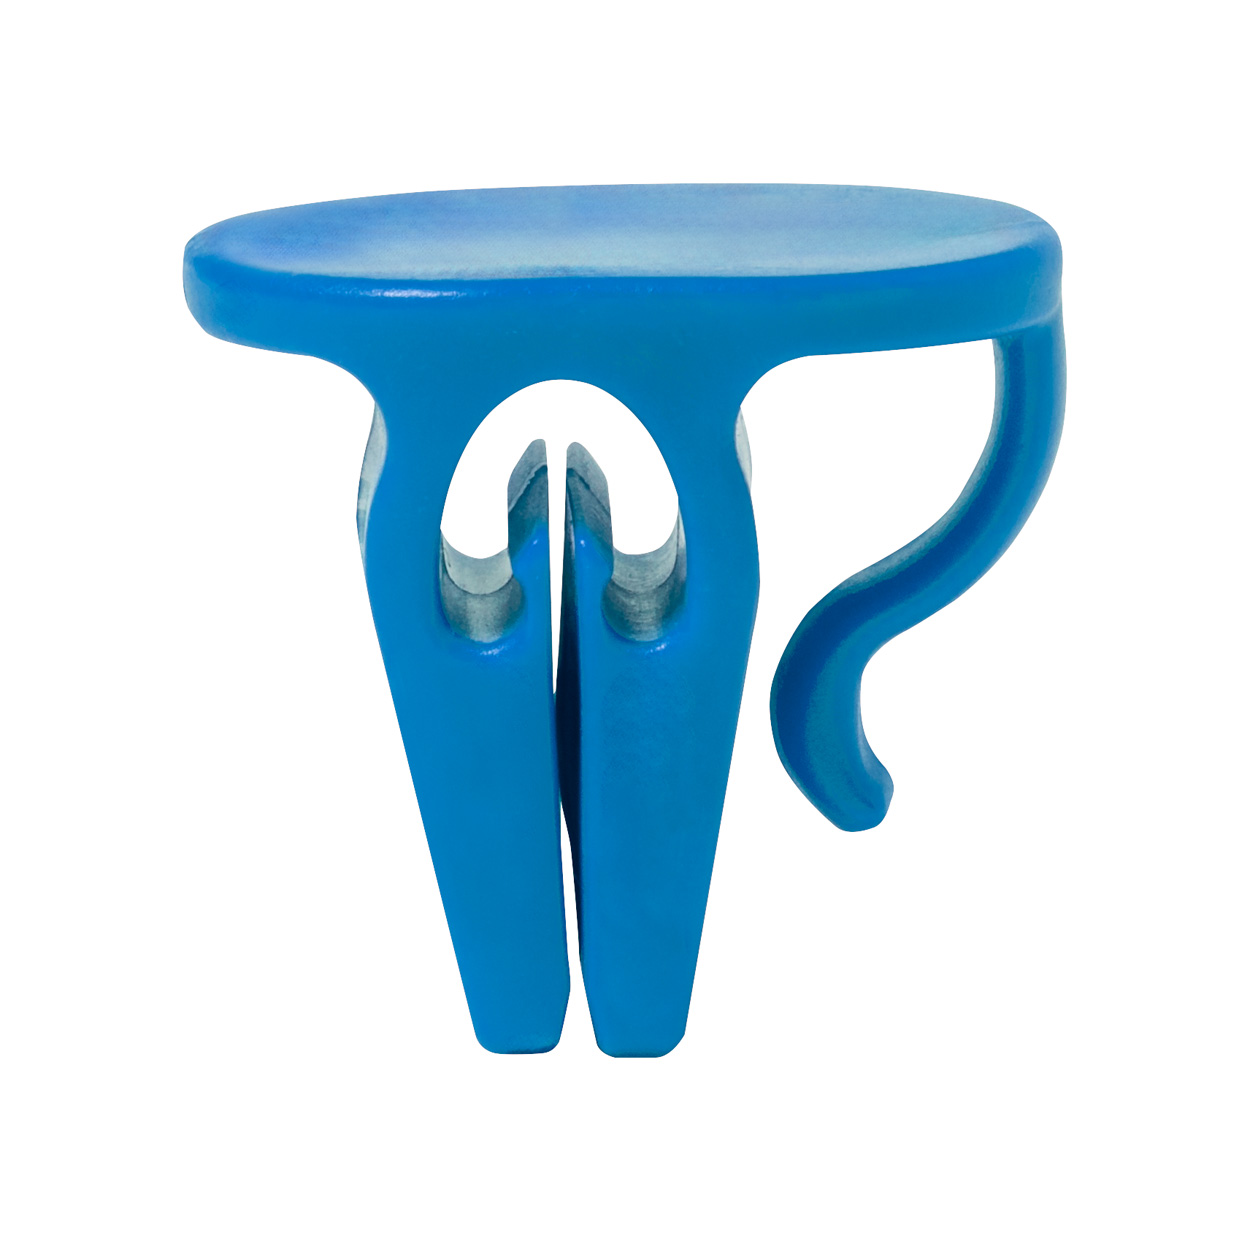 Tusca cup holder - blau